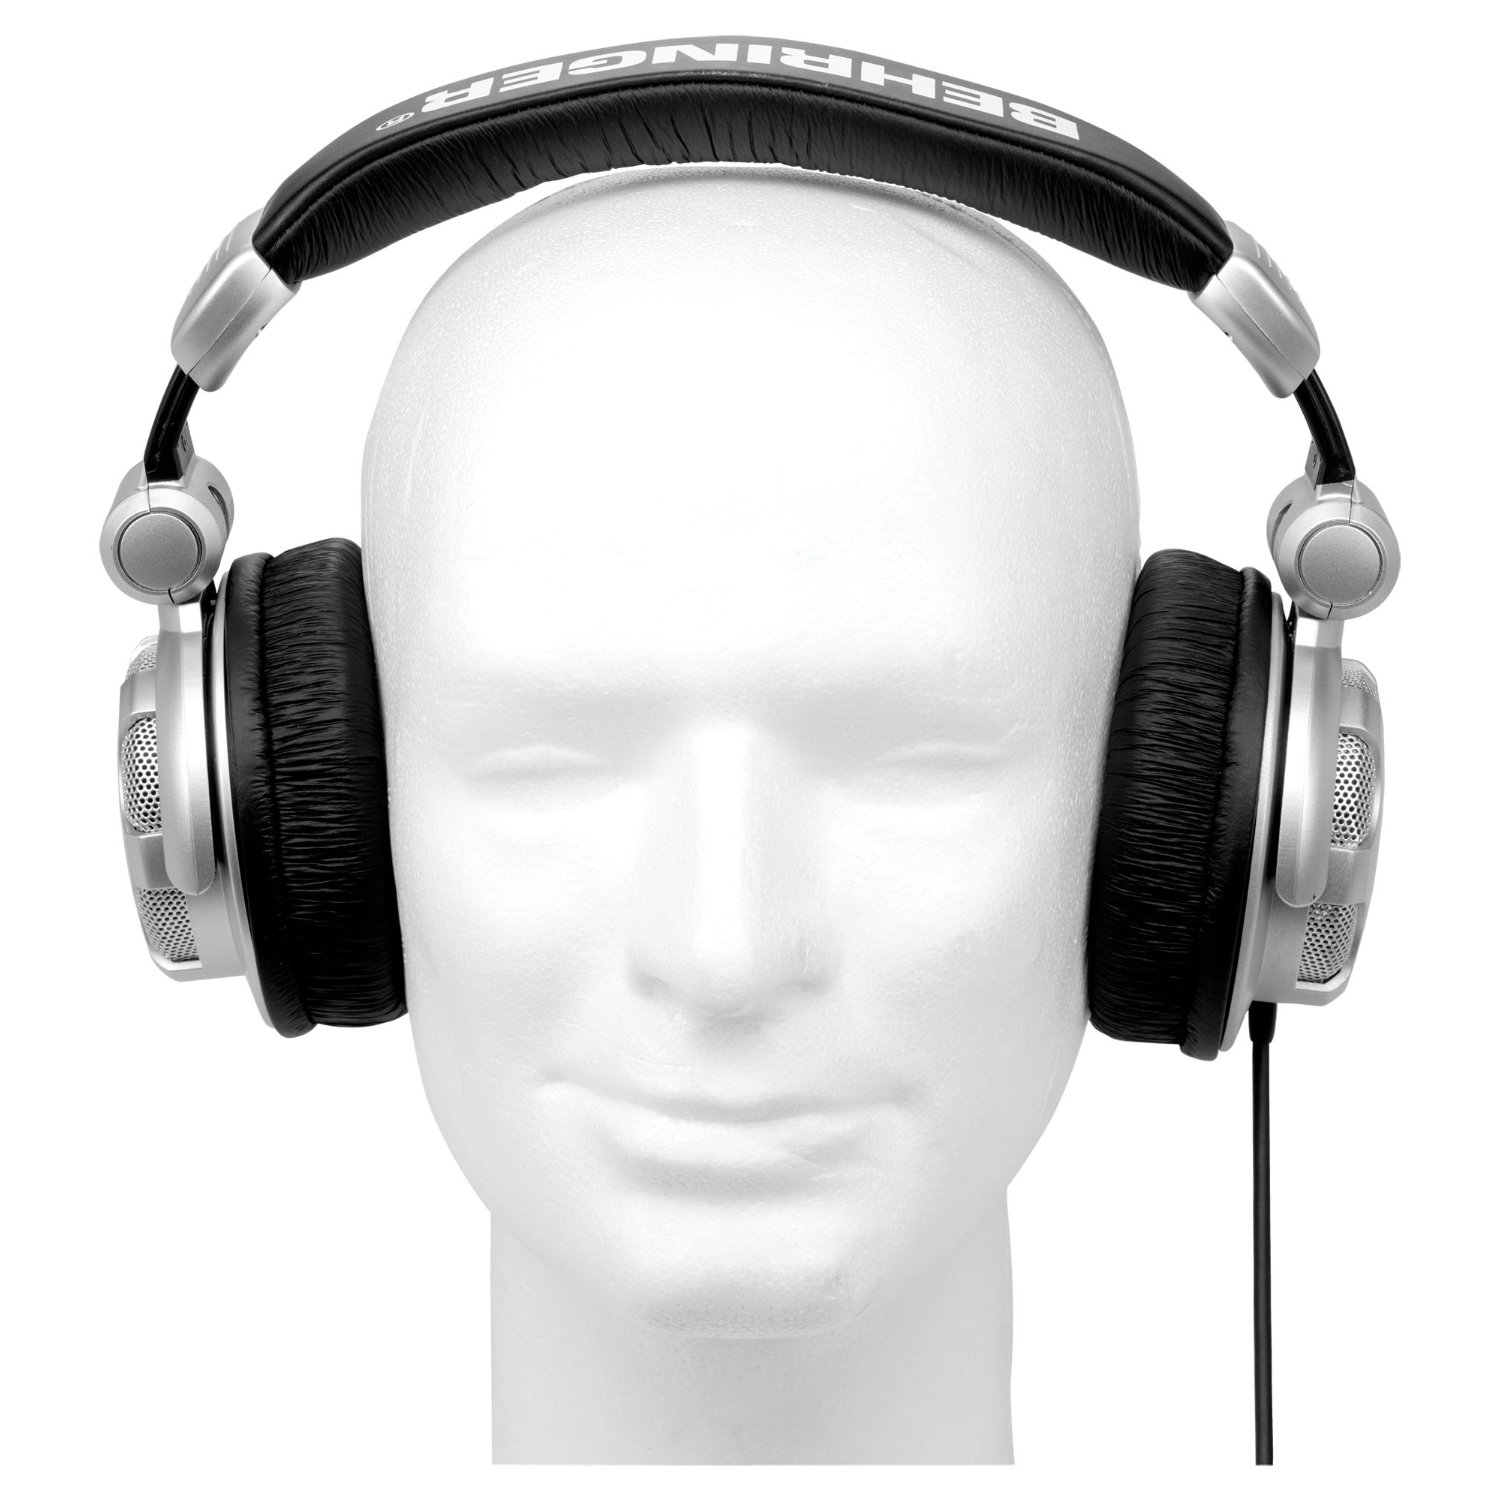 http://thetechjournal.com/wp-content/uploads/images/1111/1322355439-behringer-hpx2000-headphones-highdefinition-dj-headphones-2.jpg